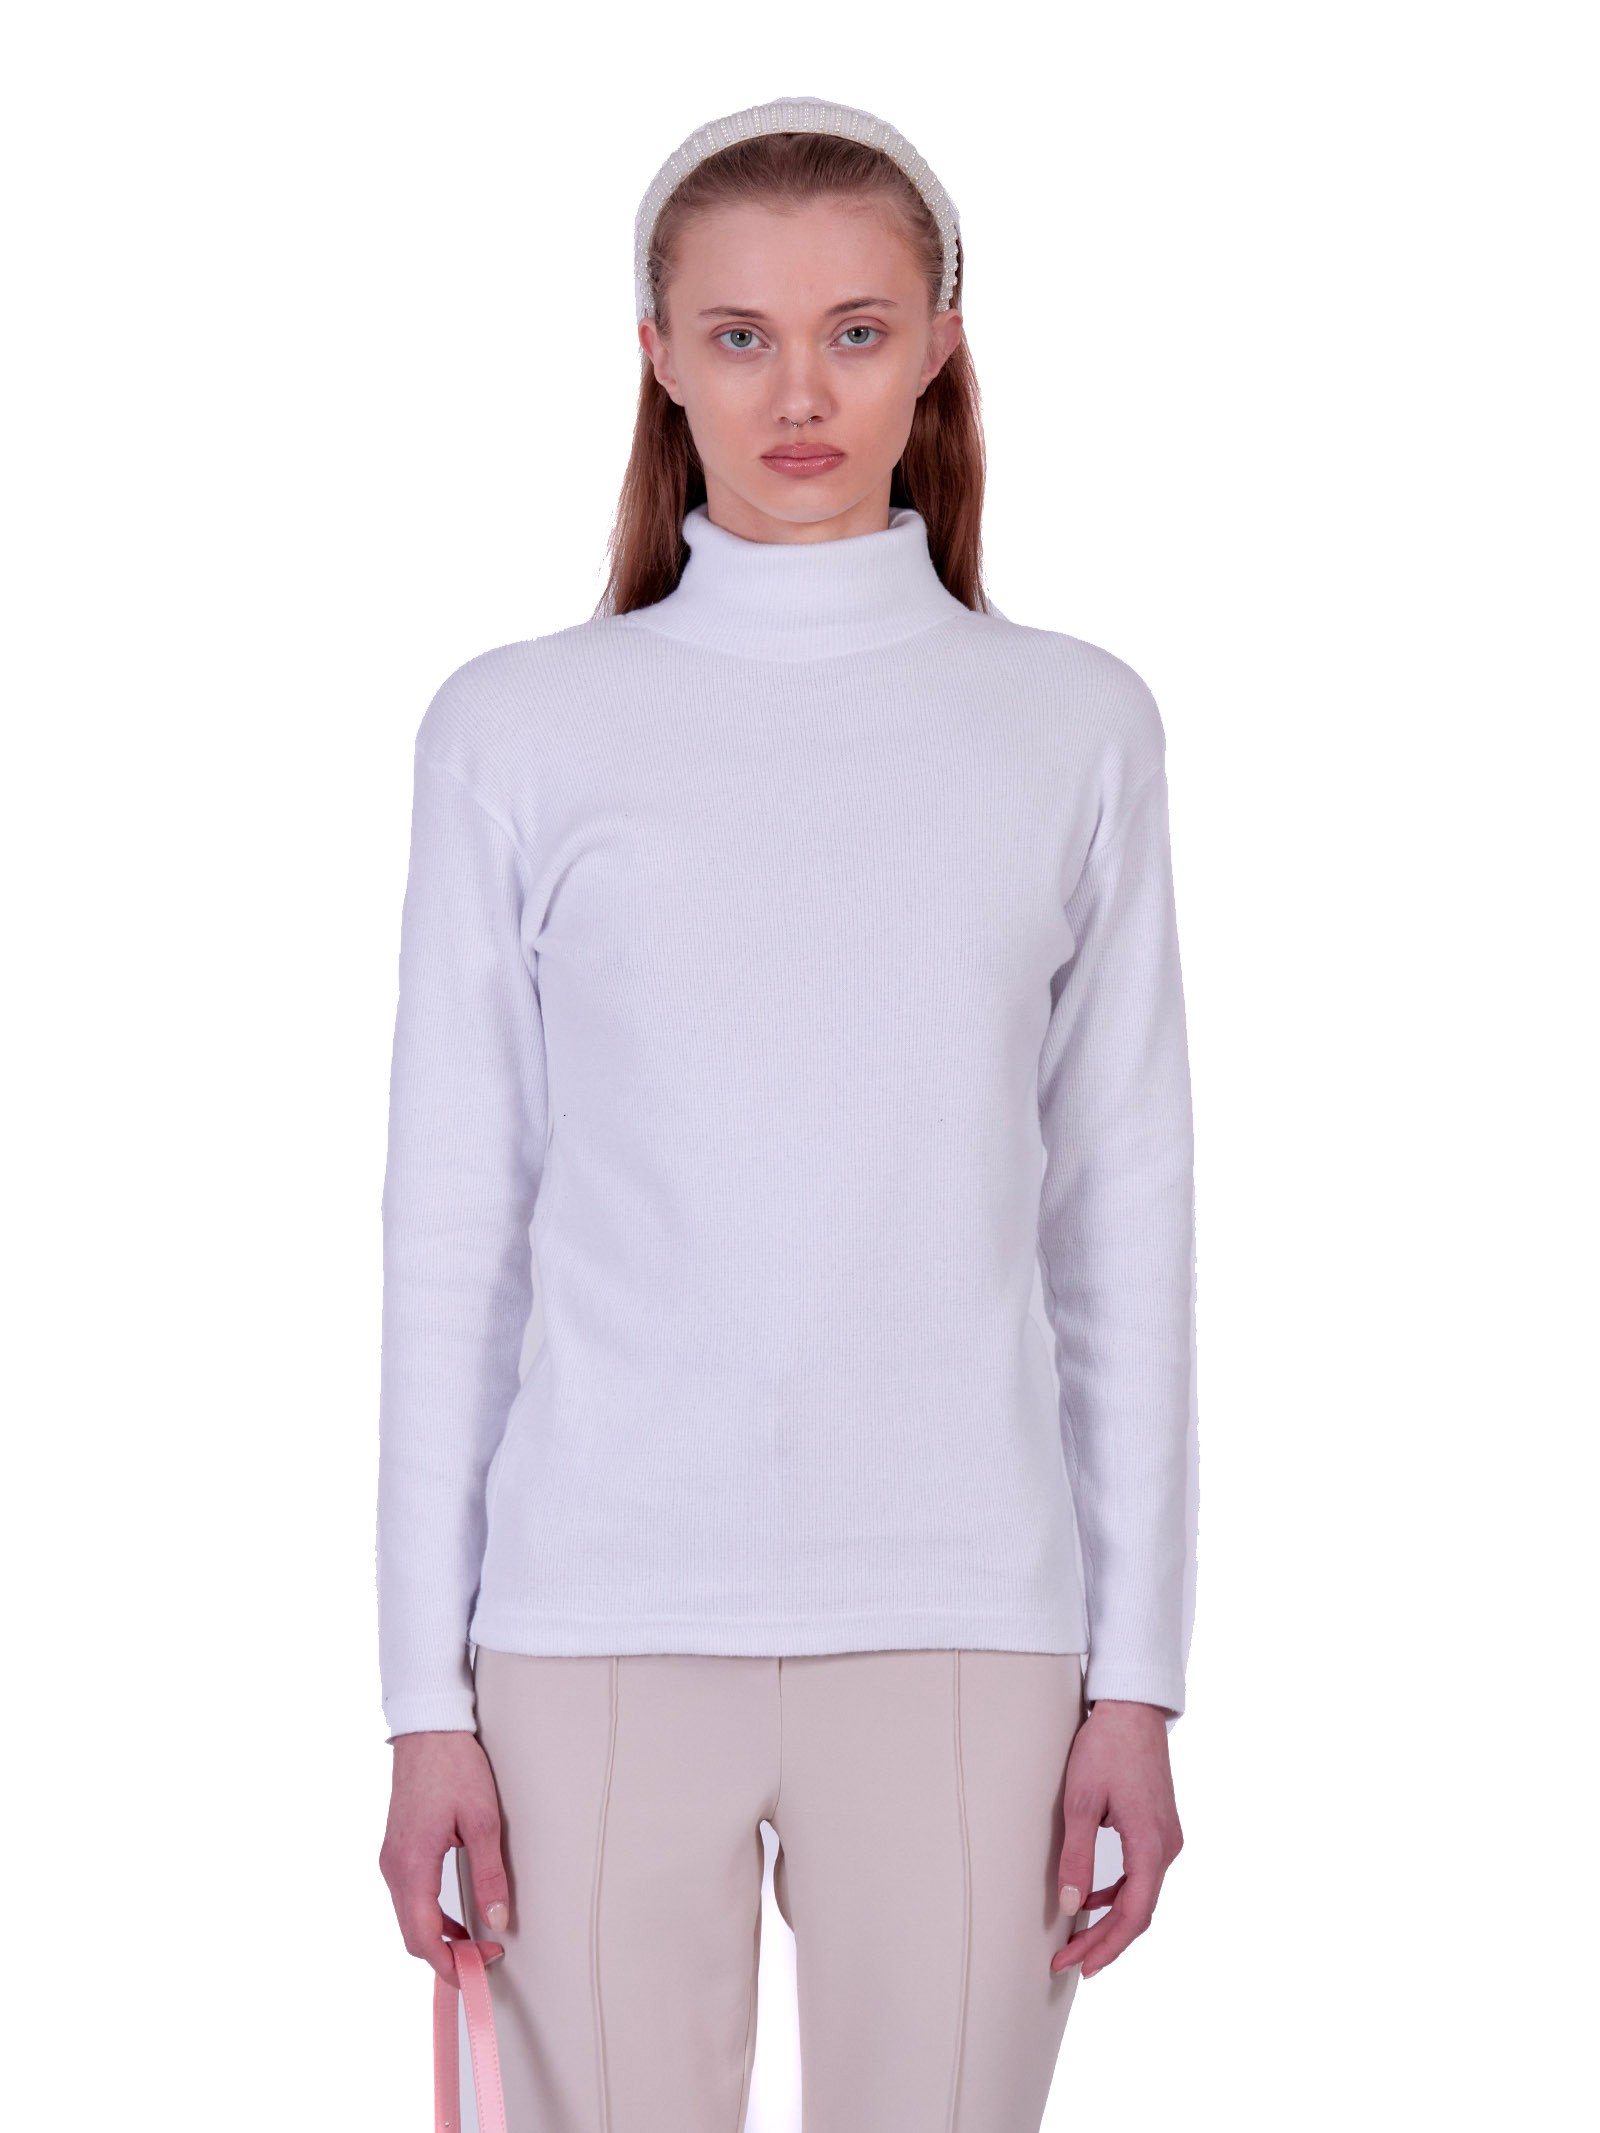 Unisex Cardigan Sweater White